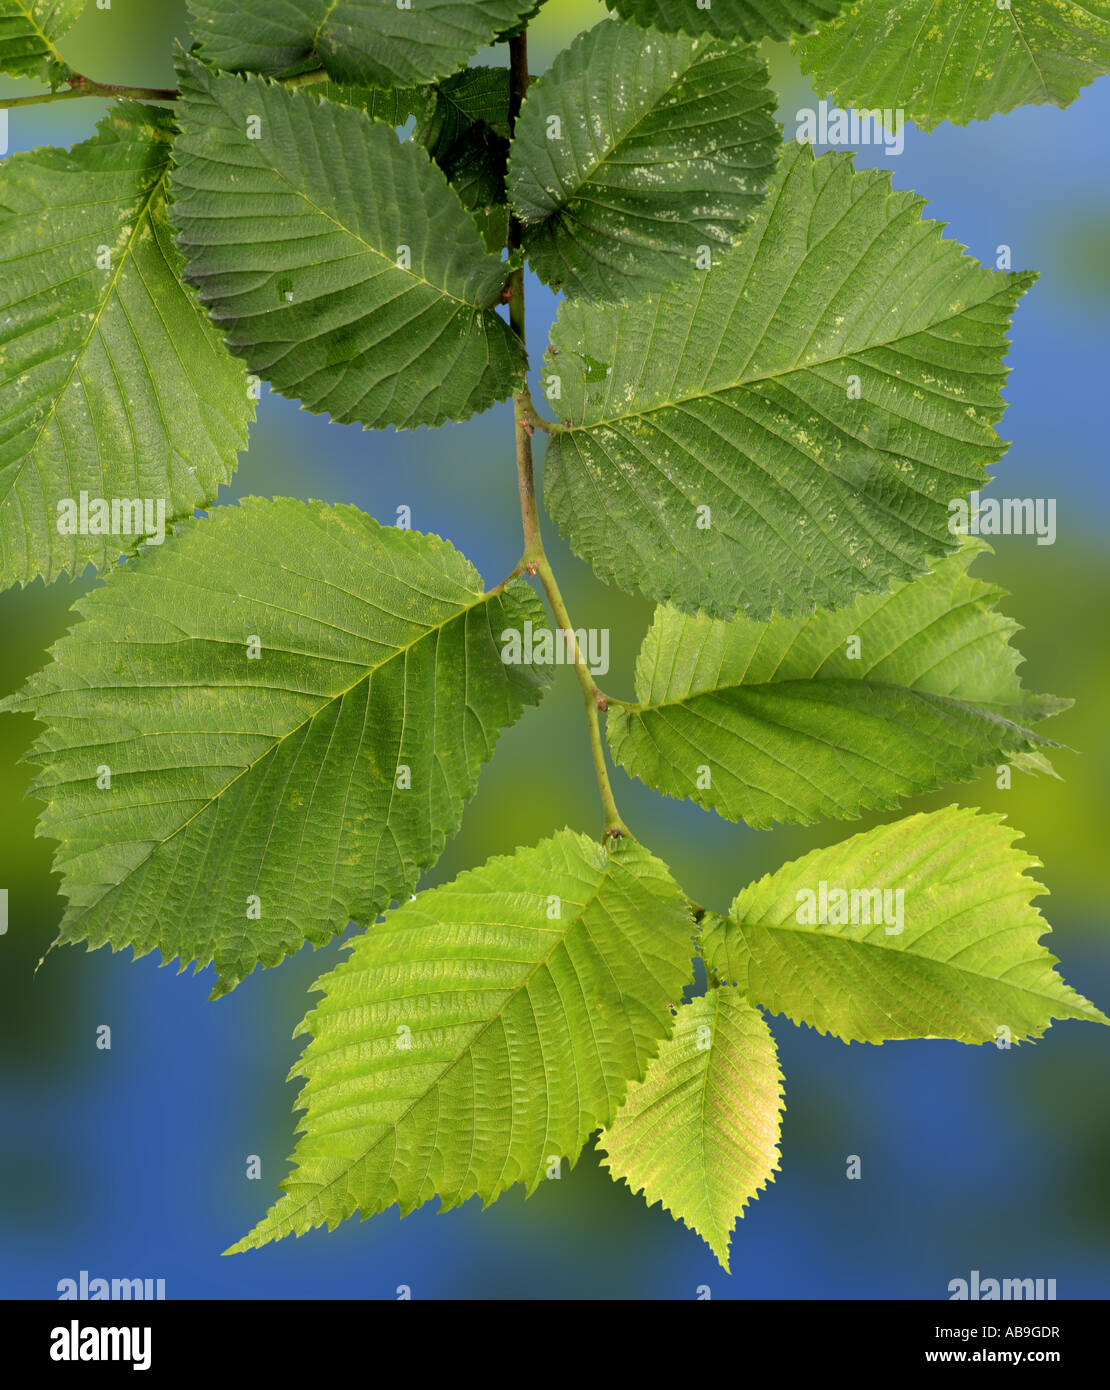 Scotch elm, wych elm (Ulmus glabra, Ulmus scabra), twig with leaves Stock Photo